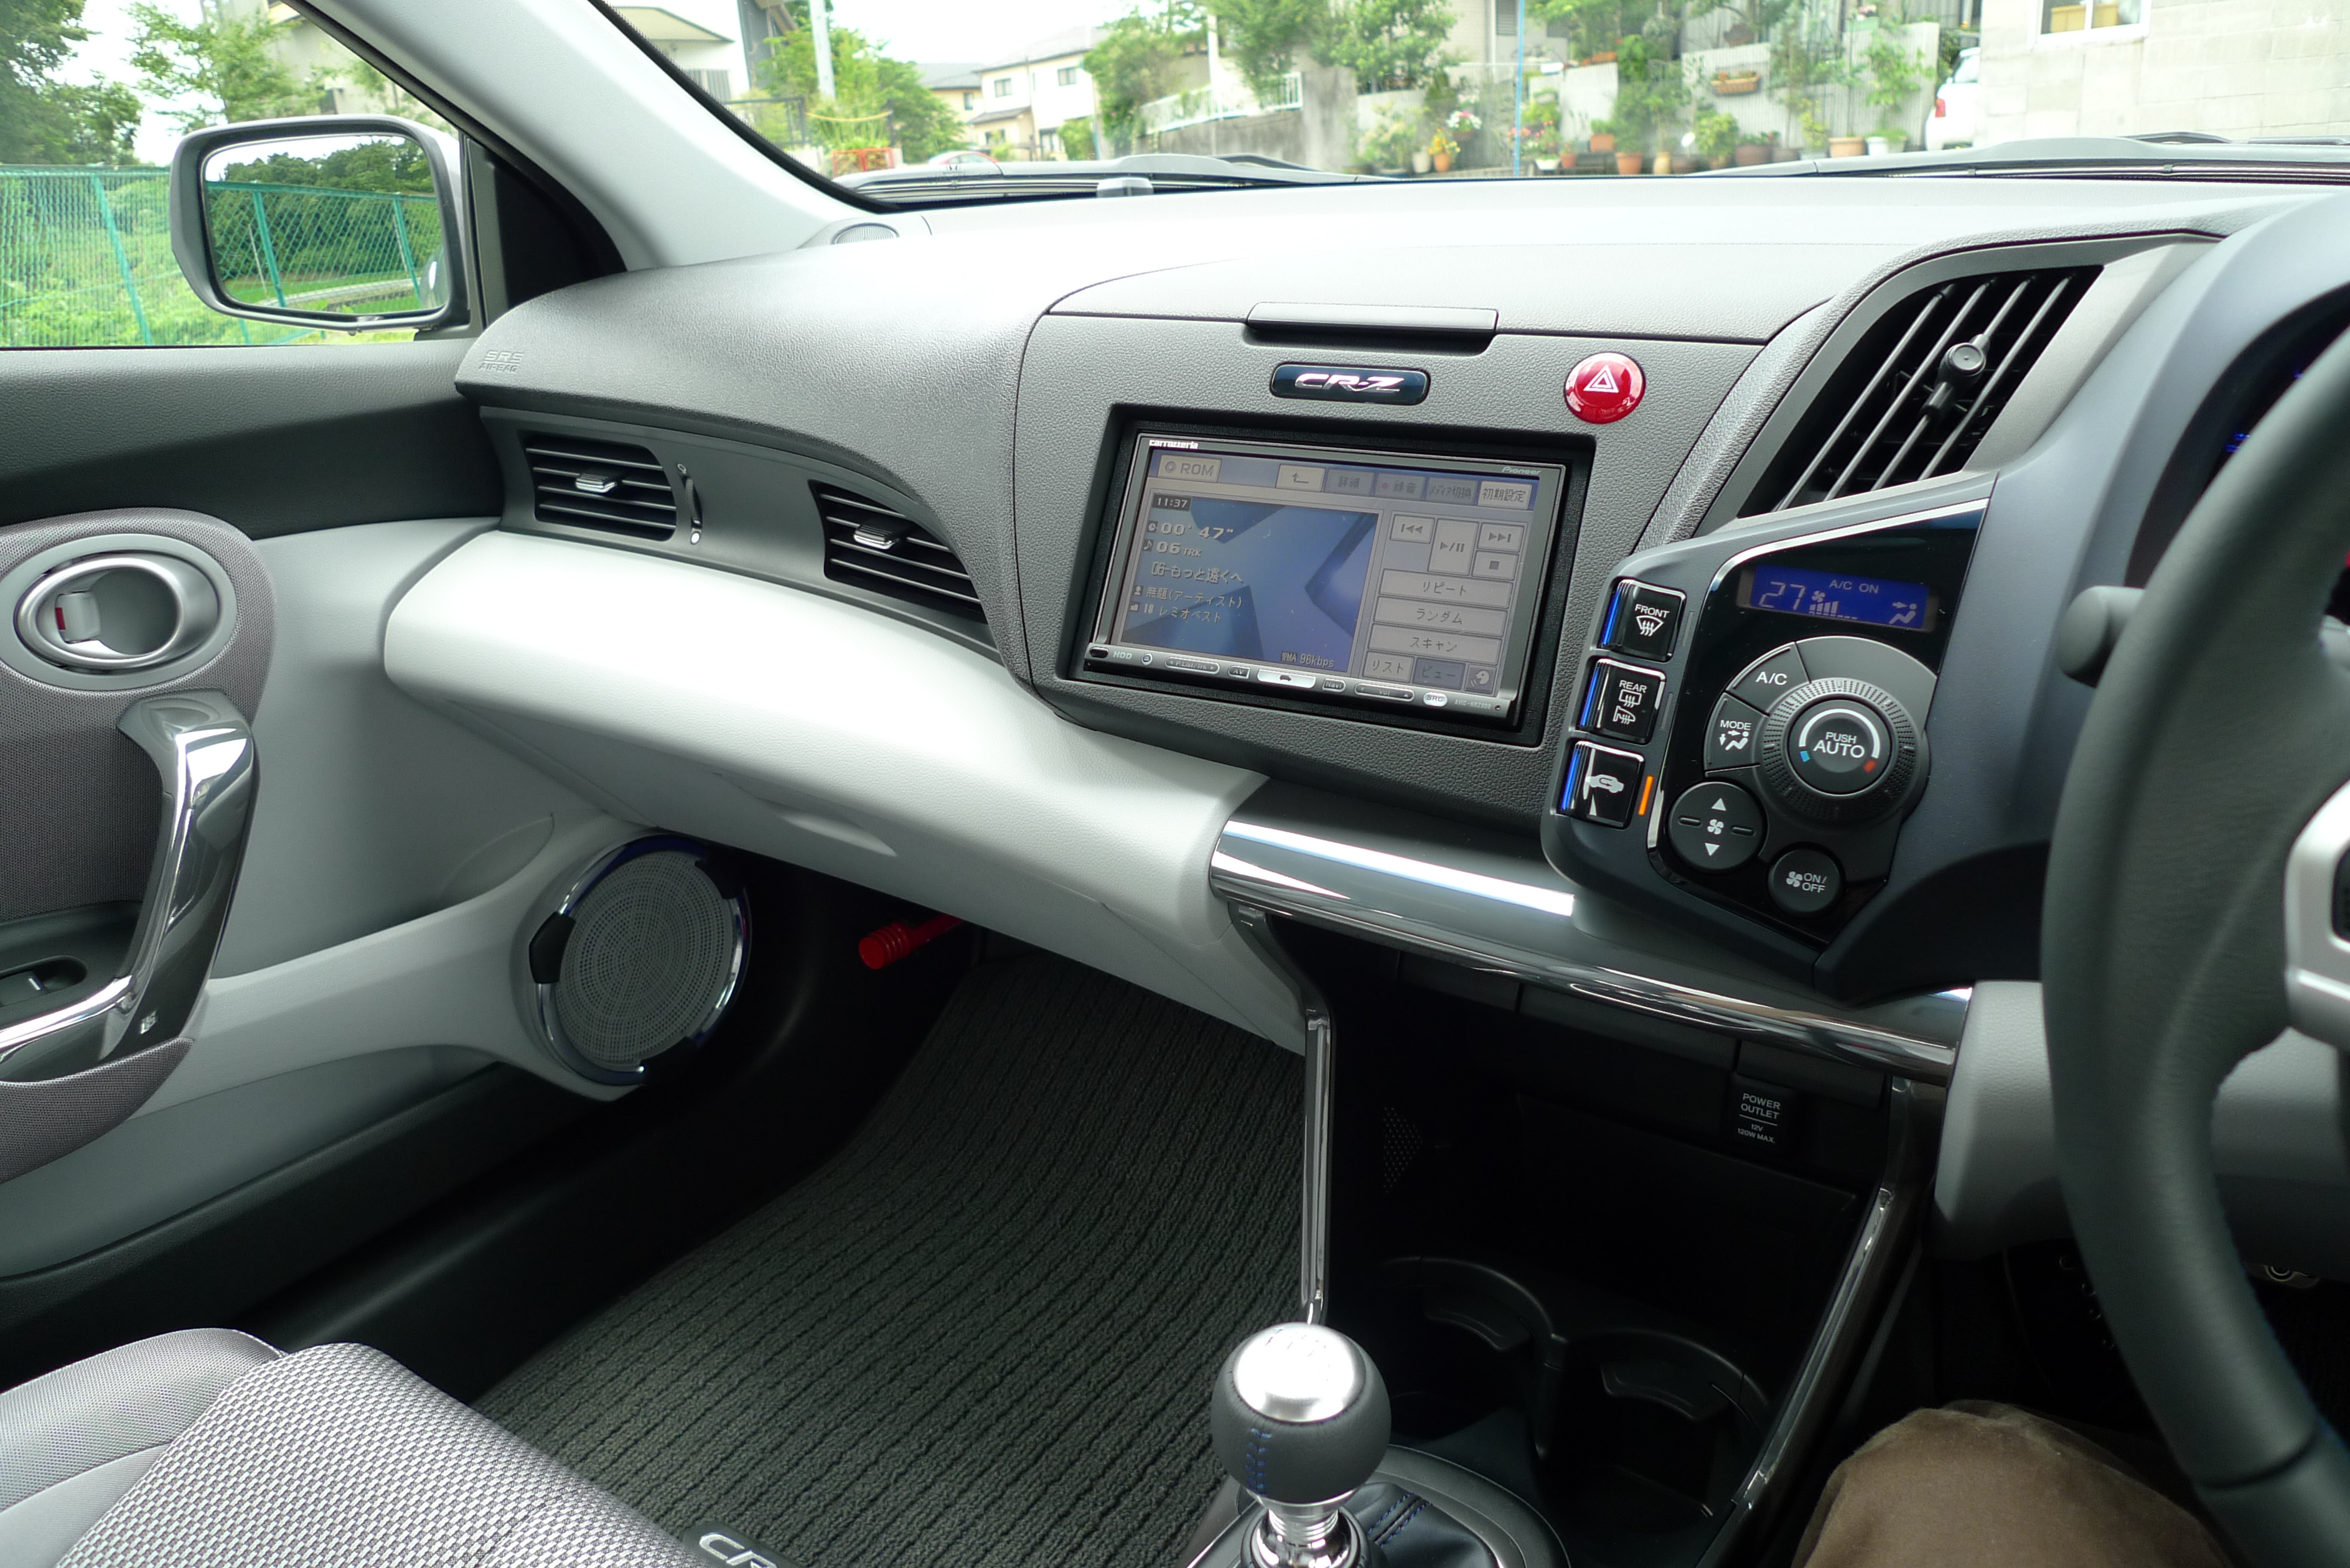 File:Interior of Honda CR-Z 02.jpg - Wikimedia Commons